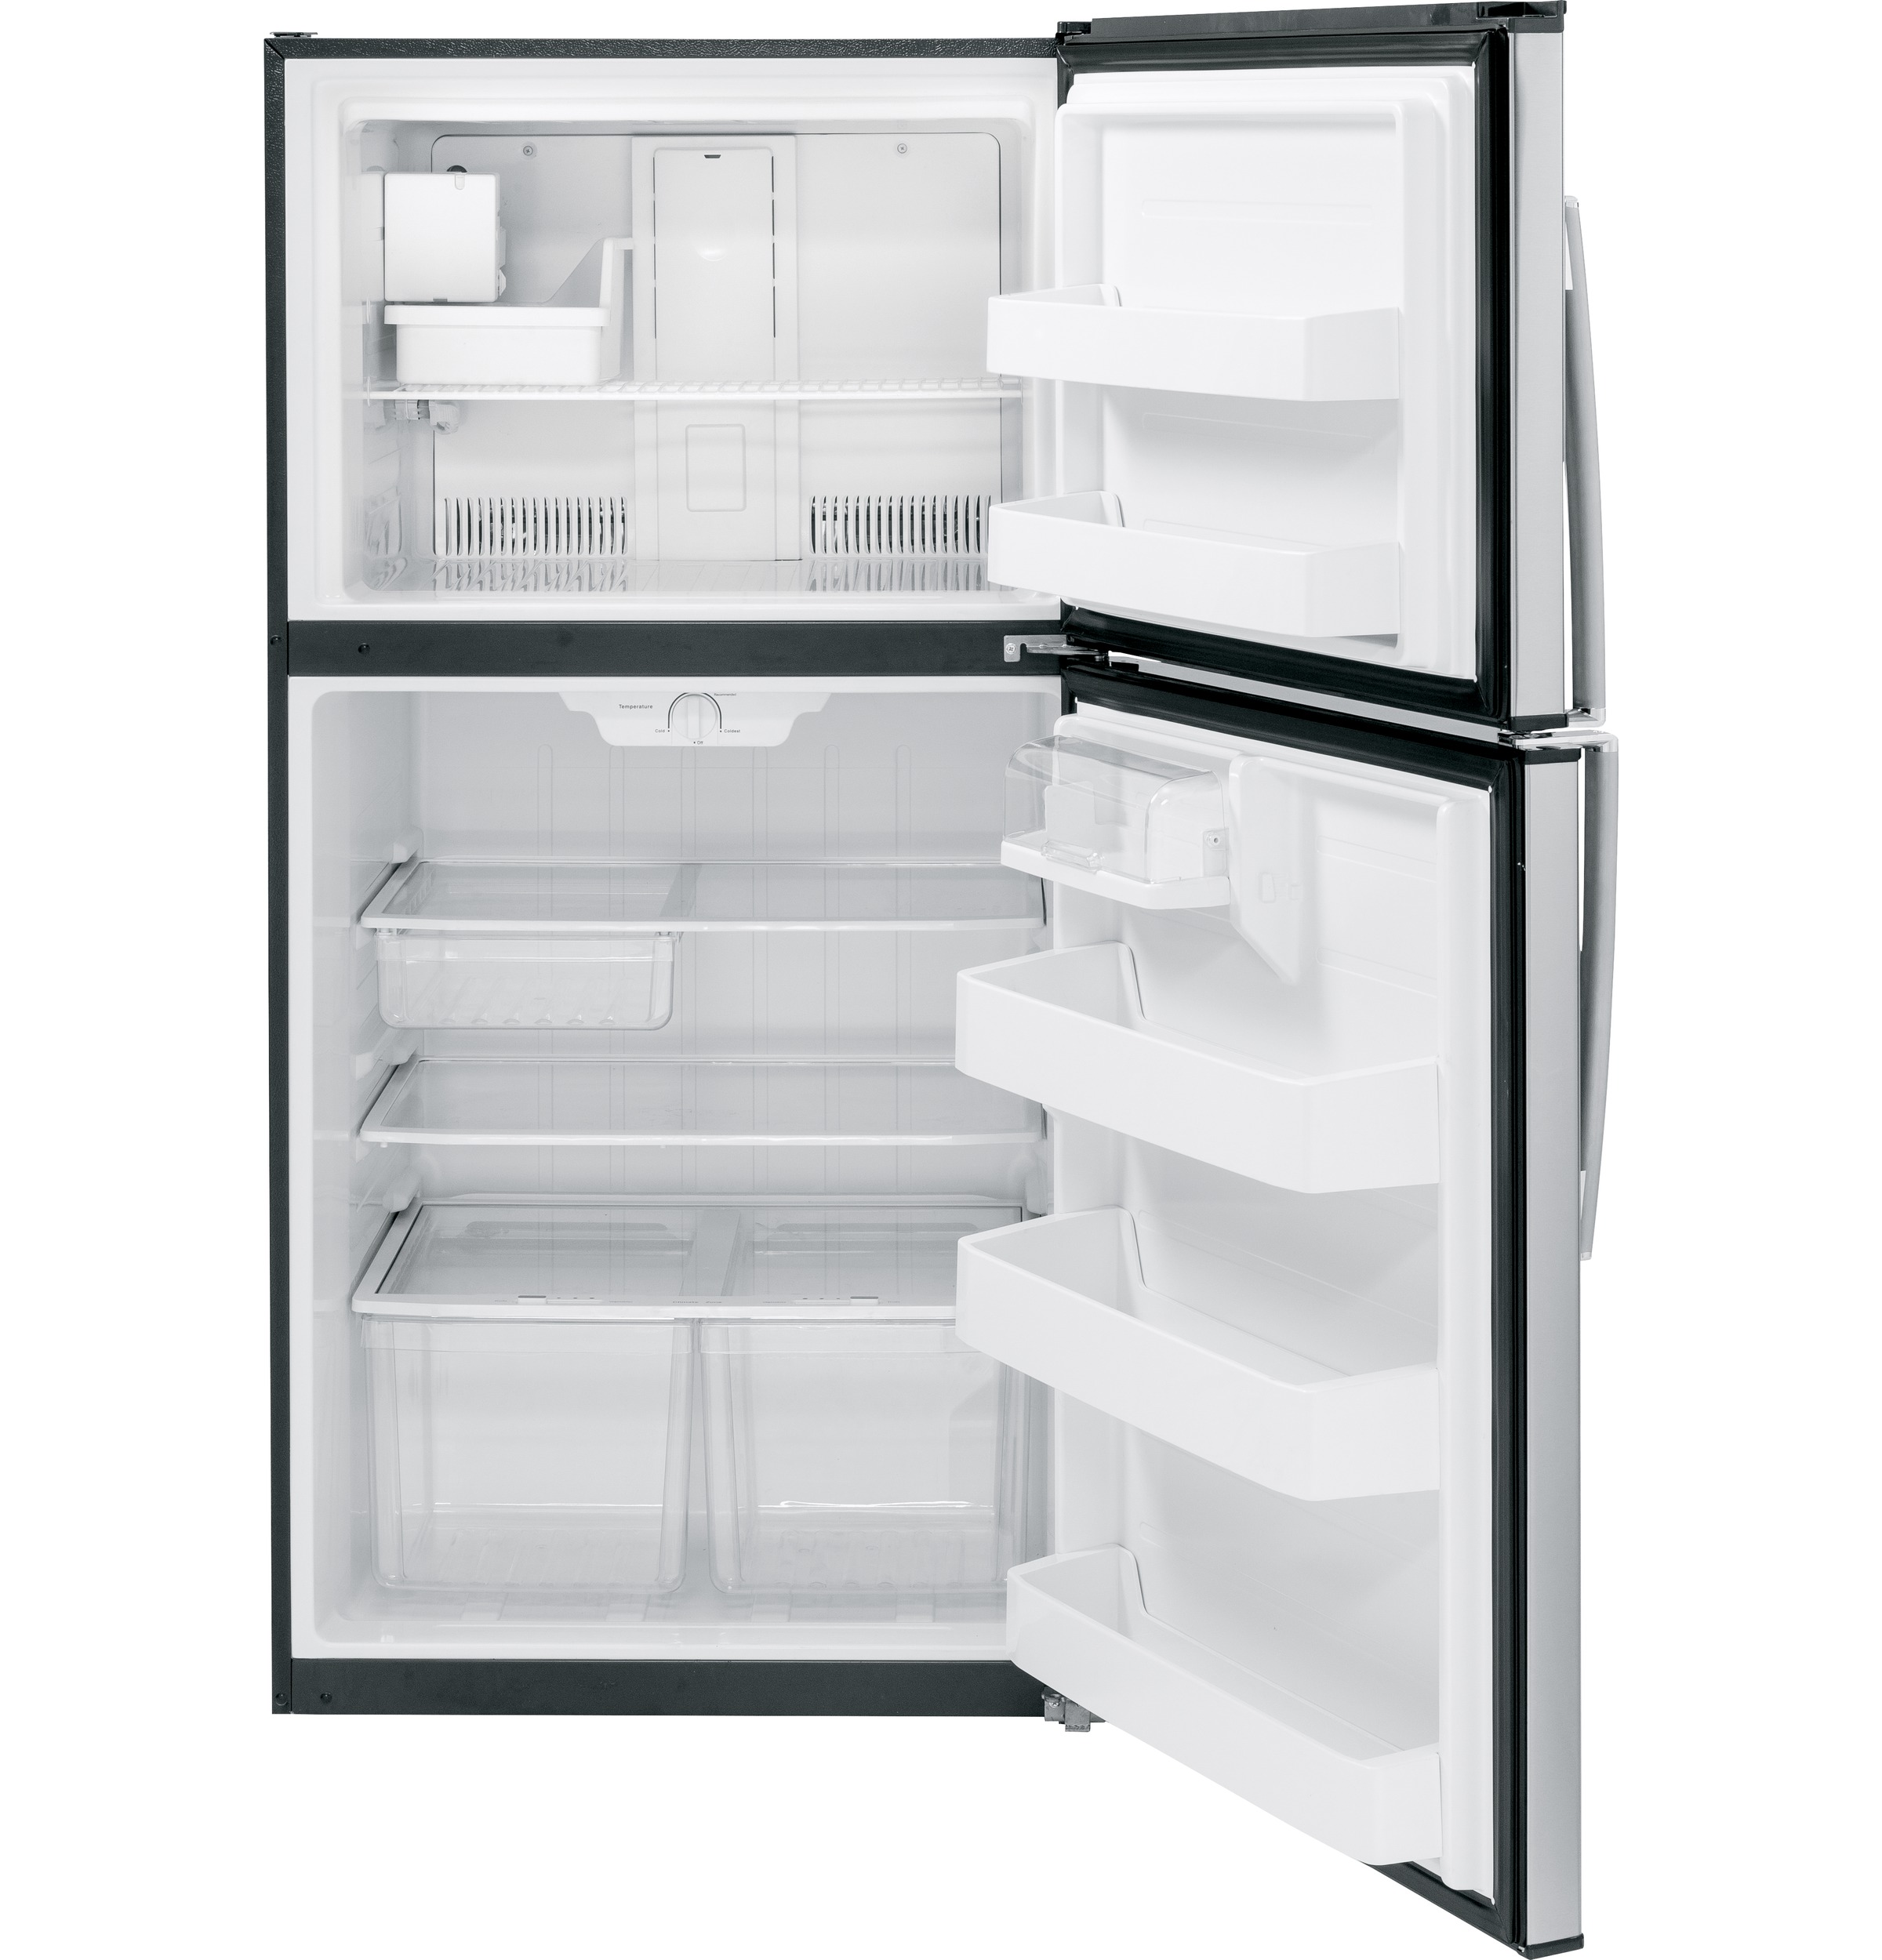 Ge 21 2 Cu Ft Top Freezer Refrigerator Stainless Steel